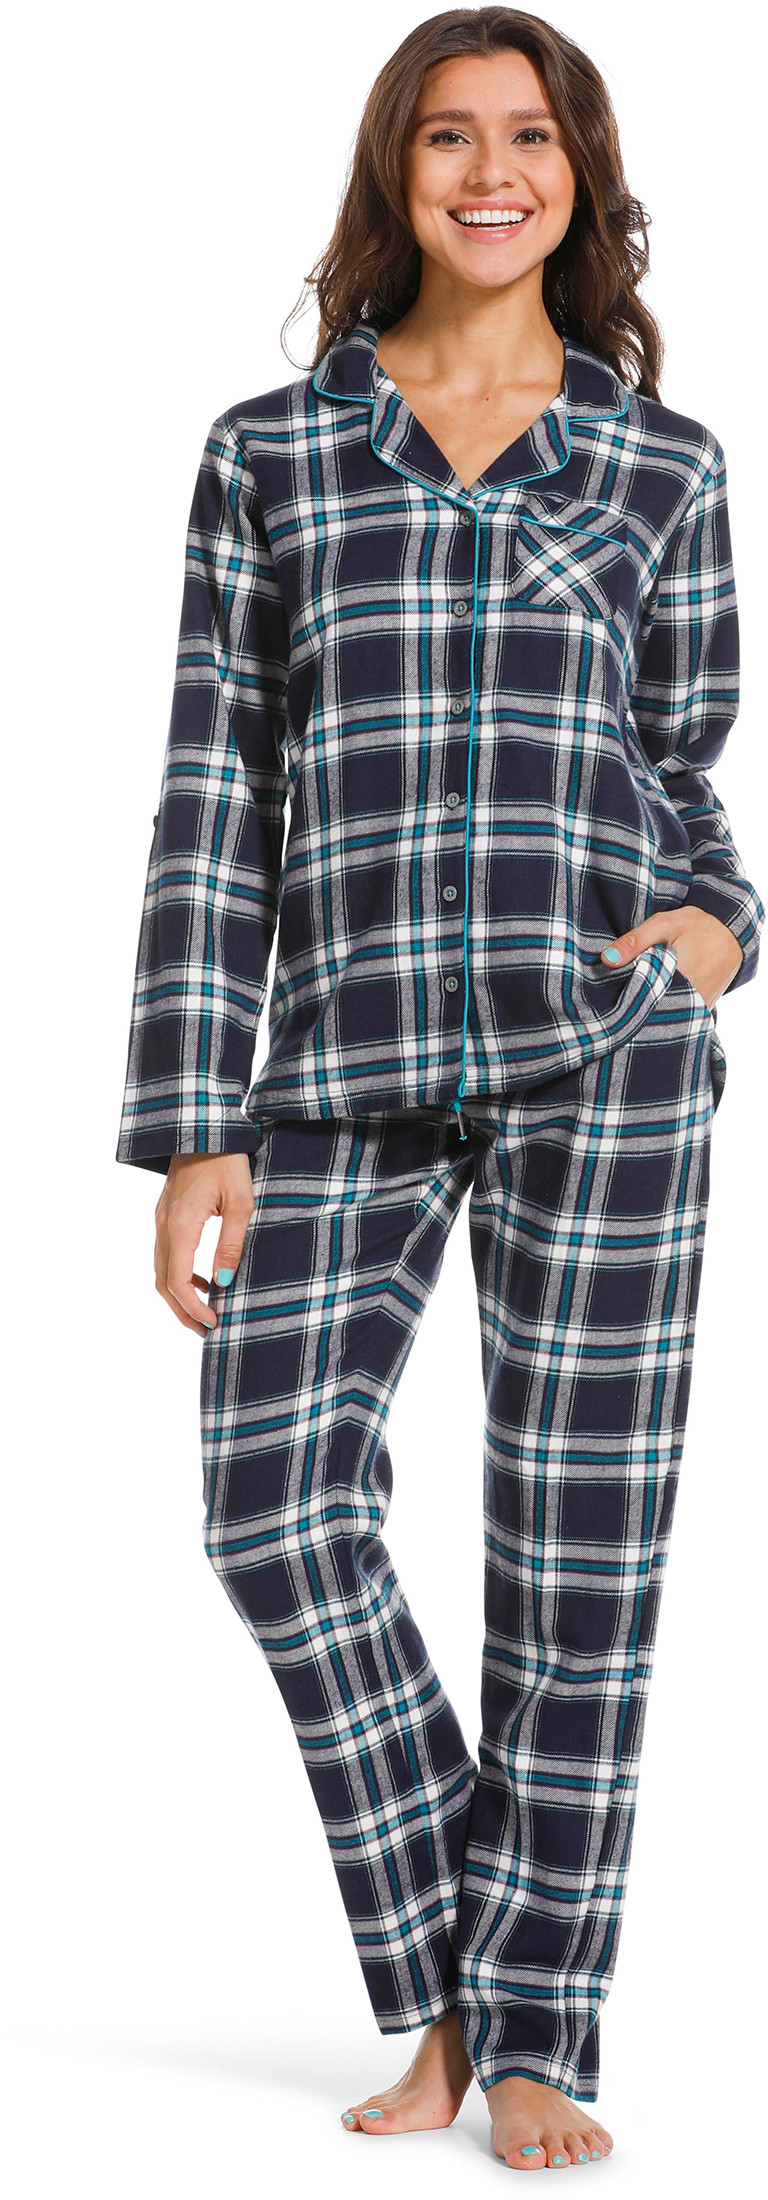 Rebelle dames pyjama flanel 21222-408-6-44